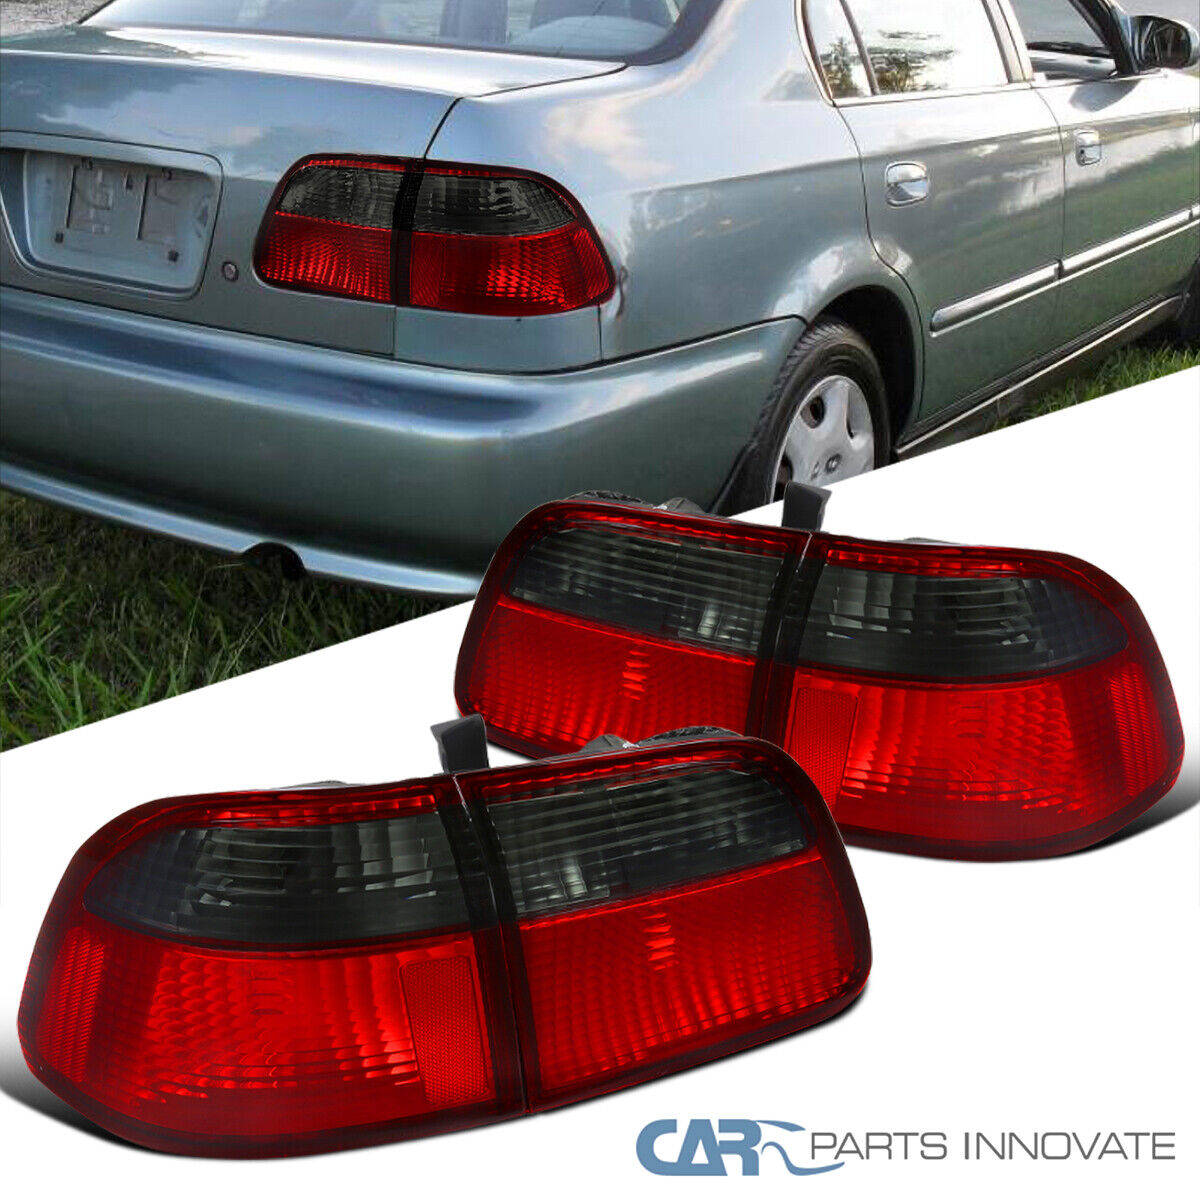 Red/Smoke Fits 1999-2000 Honda Civic 4Dr Sedan Tail Lights Lamps Left+Right Pair